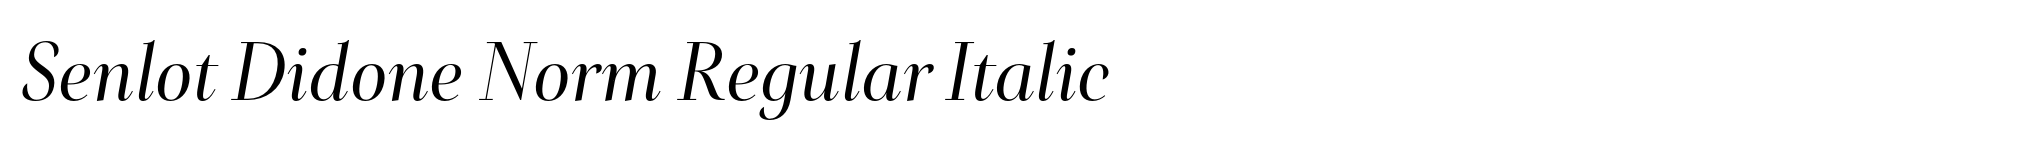 Senlot Didone Norm Regular Italic image